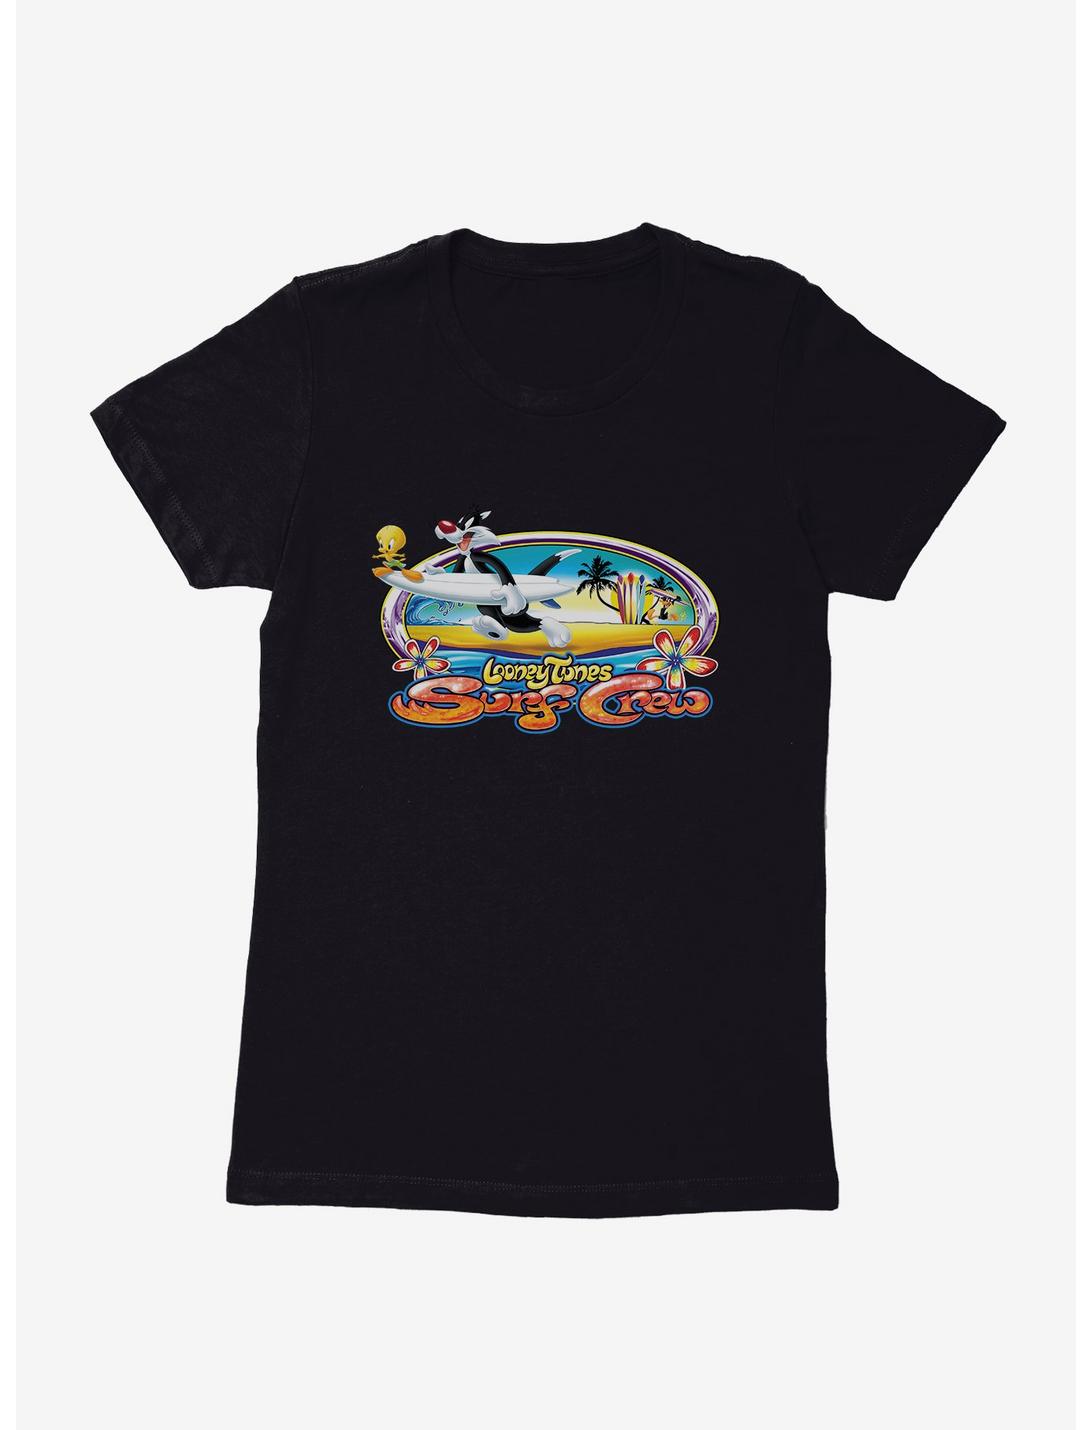 Looney Tunes Surf Crew Womens T-Shirt, BLACK, hi-res